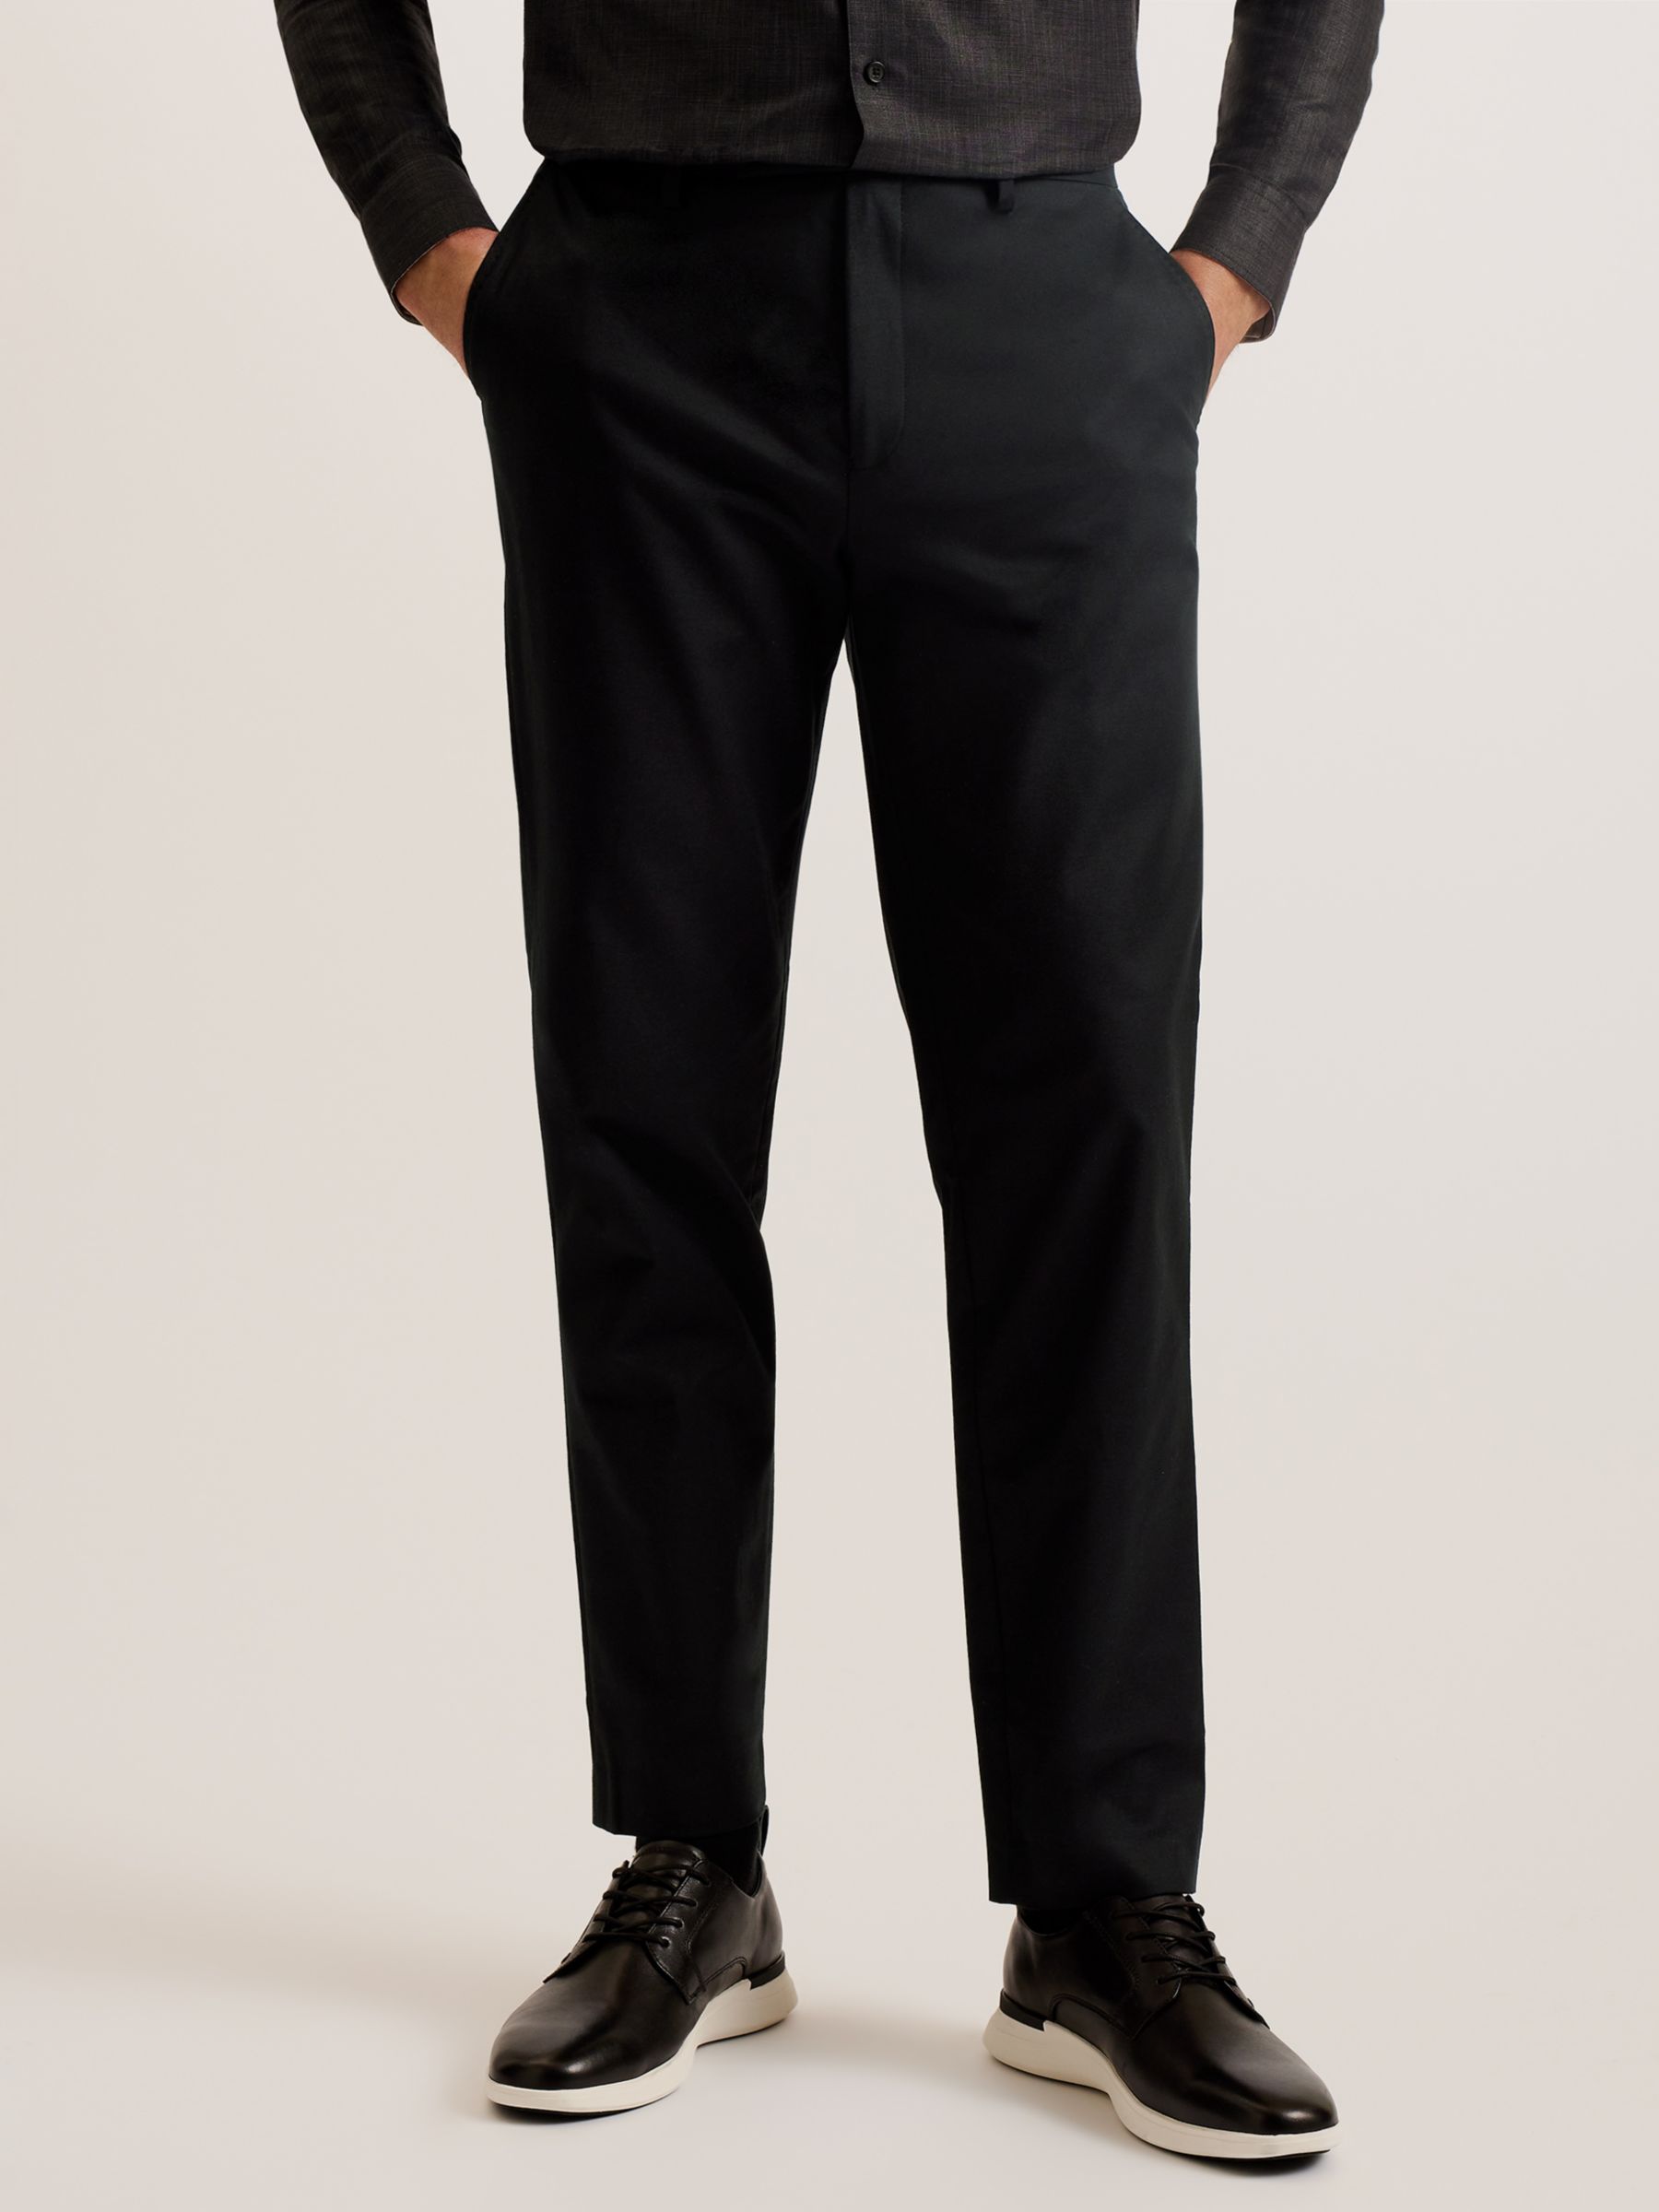 Ted Baker Felixt Slim Fit Cotton Tailored Trousers, Black, Black, 28R